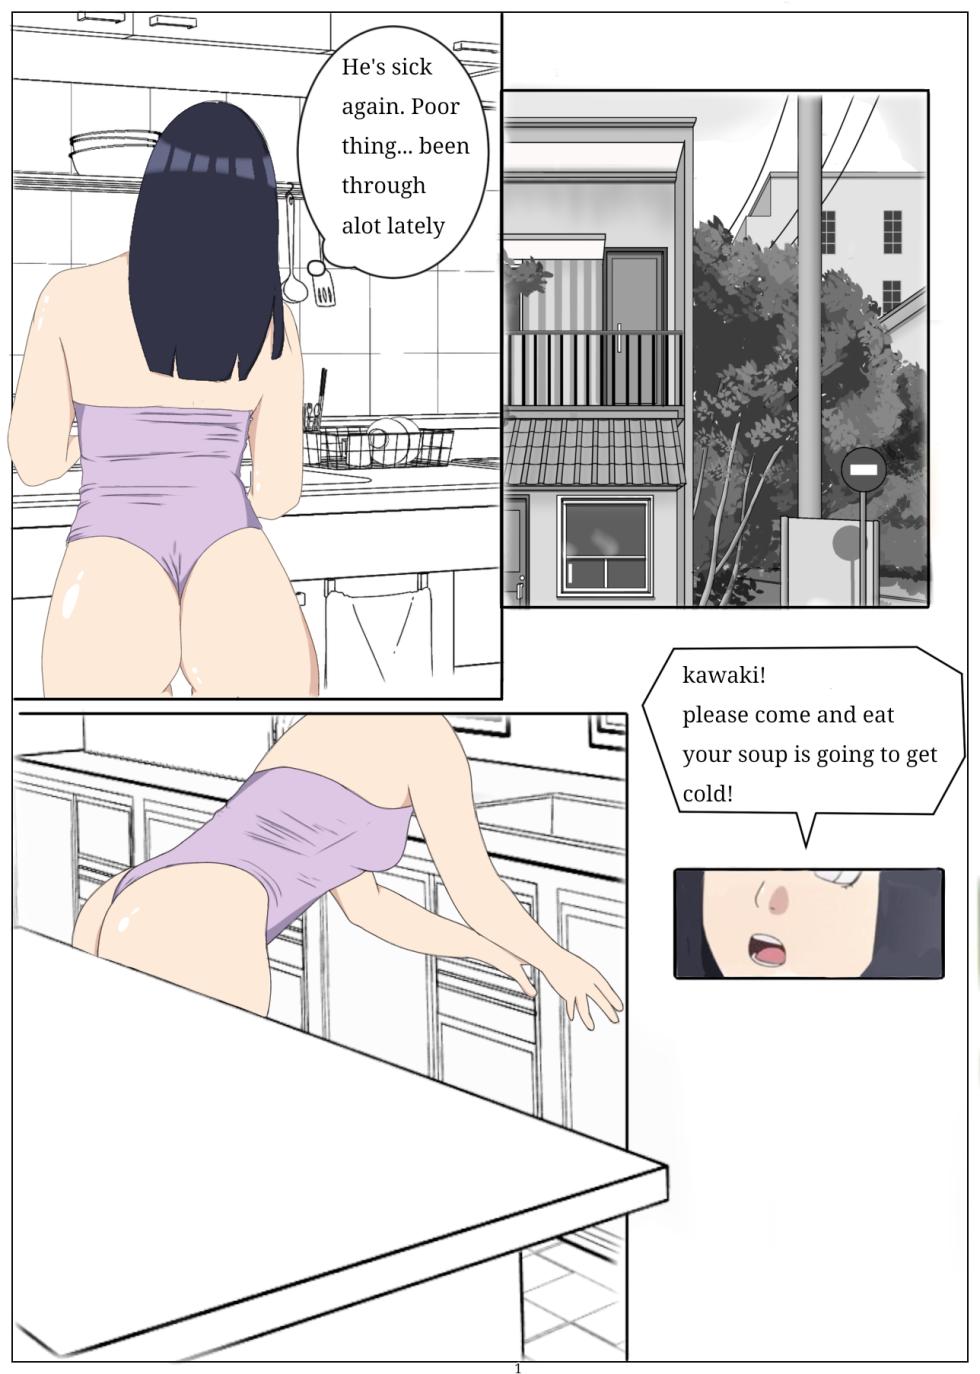 Morning Comfort: Kawaki's Recovery - Page 3